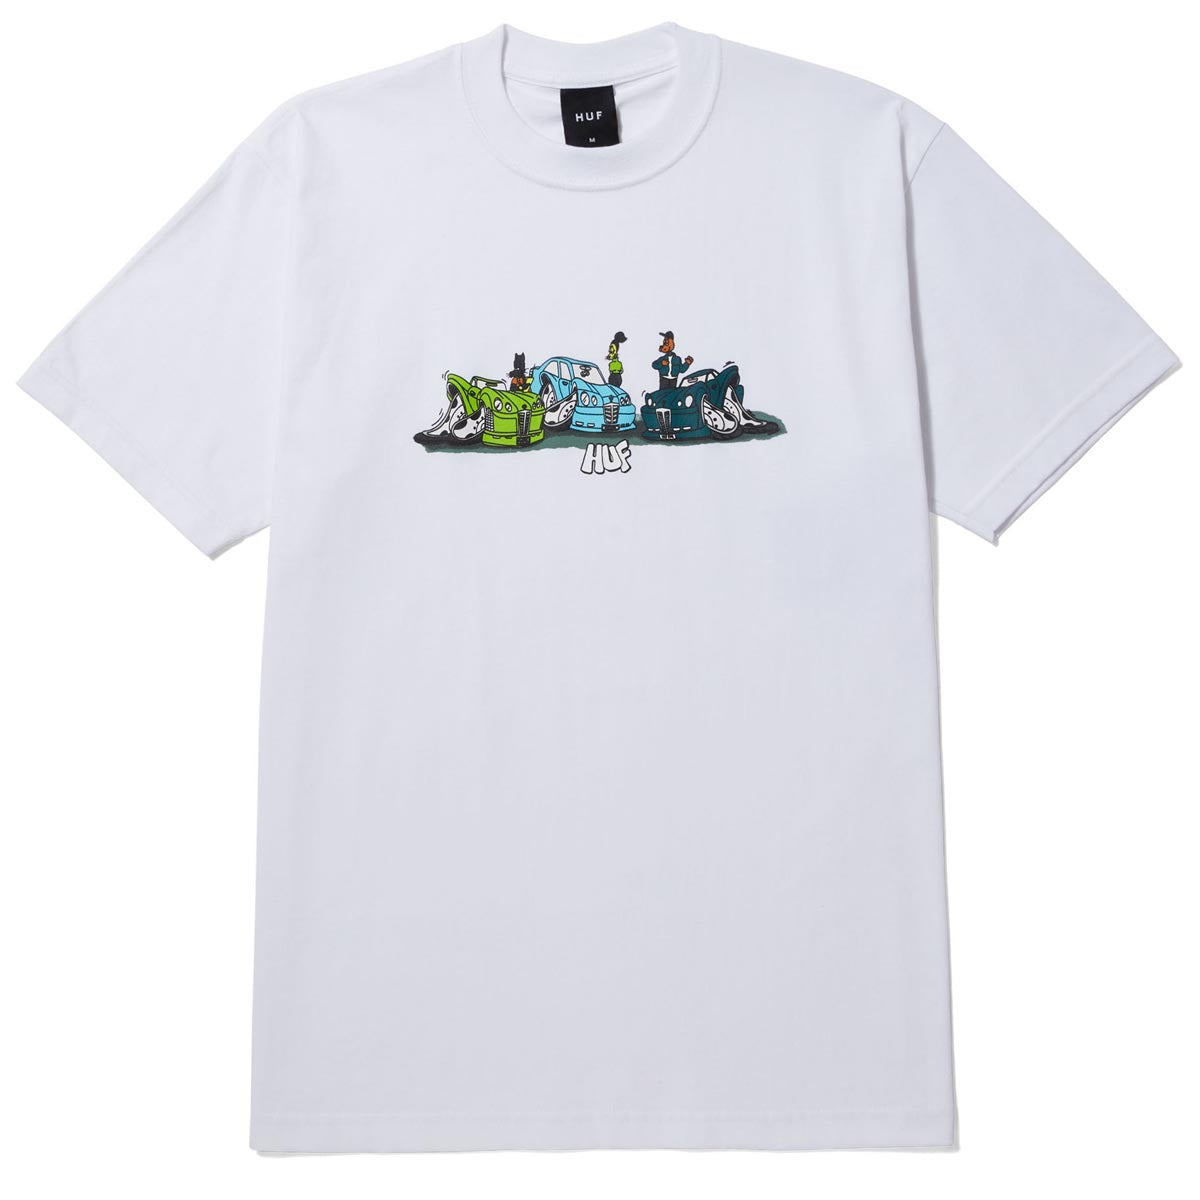 HUF Car Show T-Shirt - White image 1